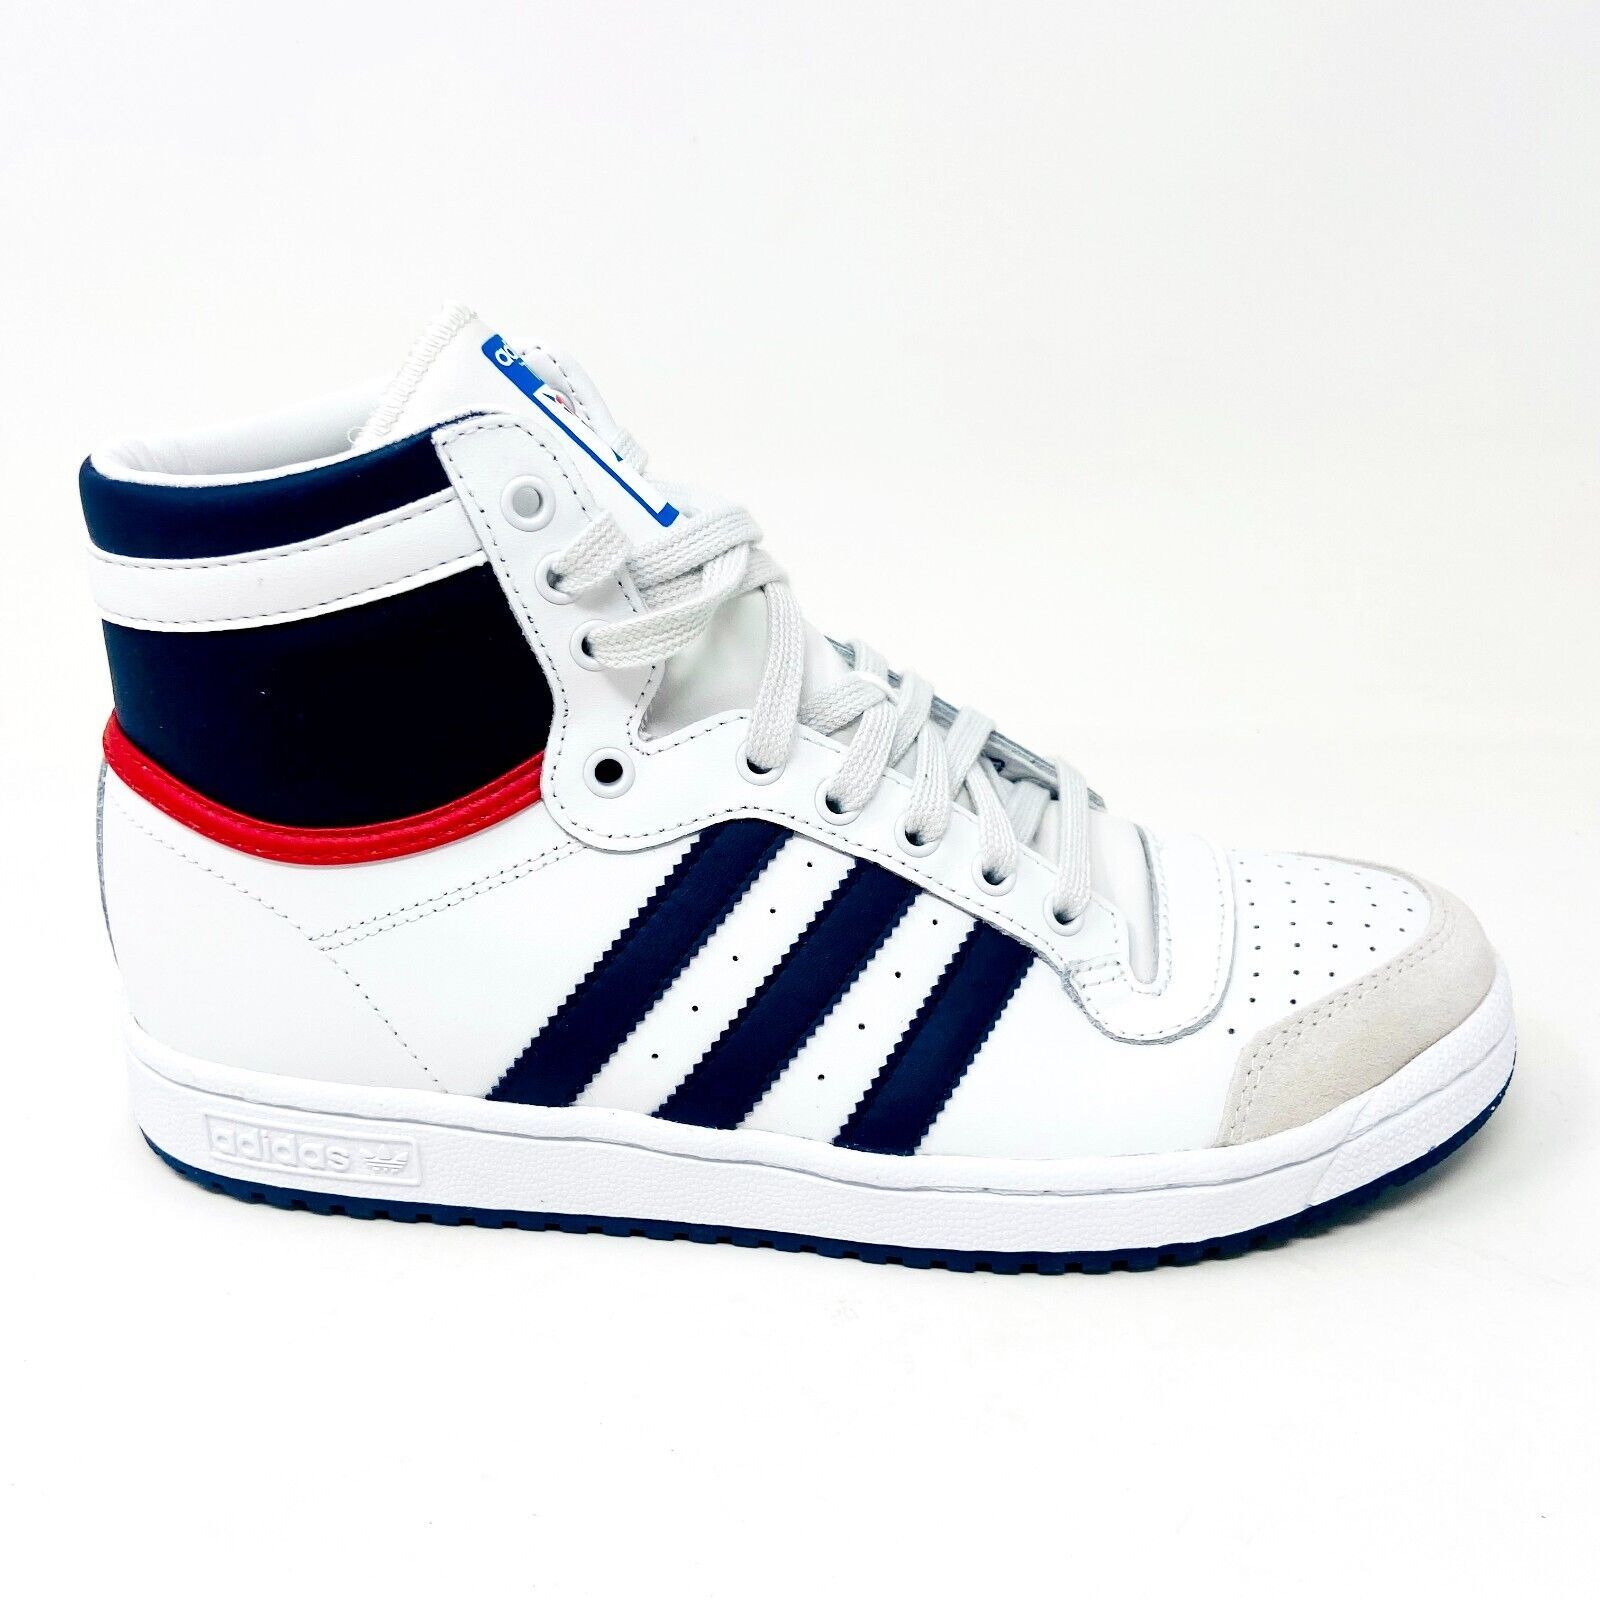 Adidas Originals Top Ten Hi Junior White Blue Red Kids Leather Sneakers D74481